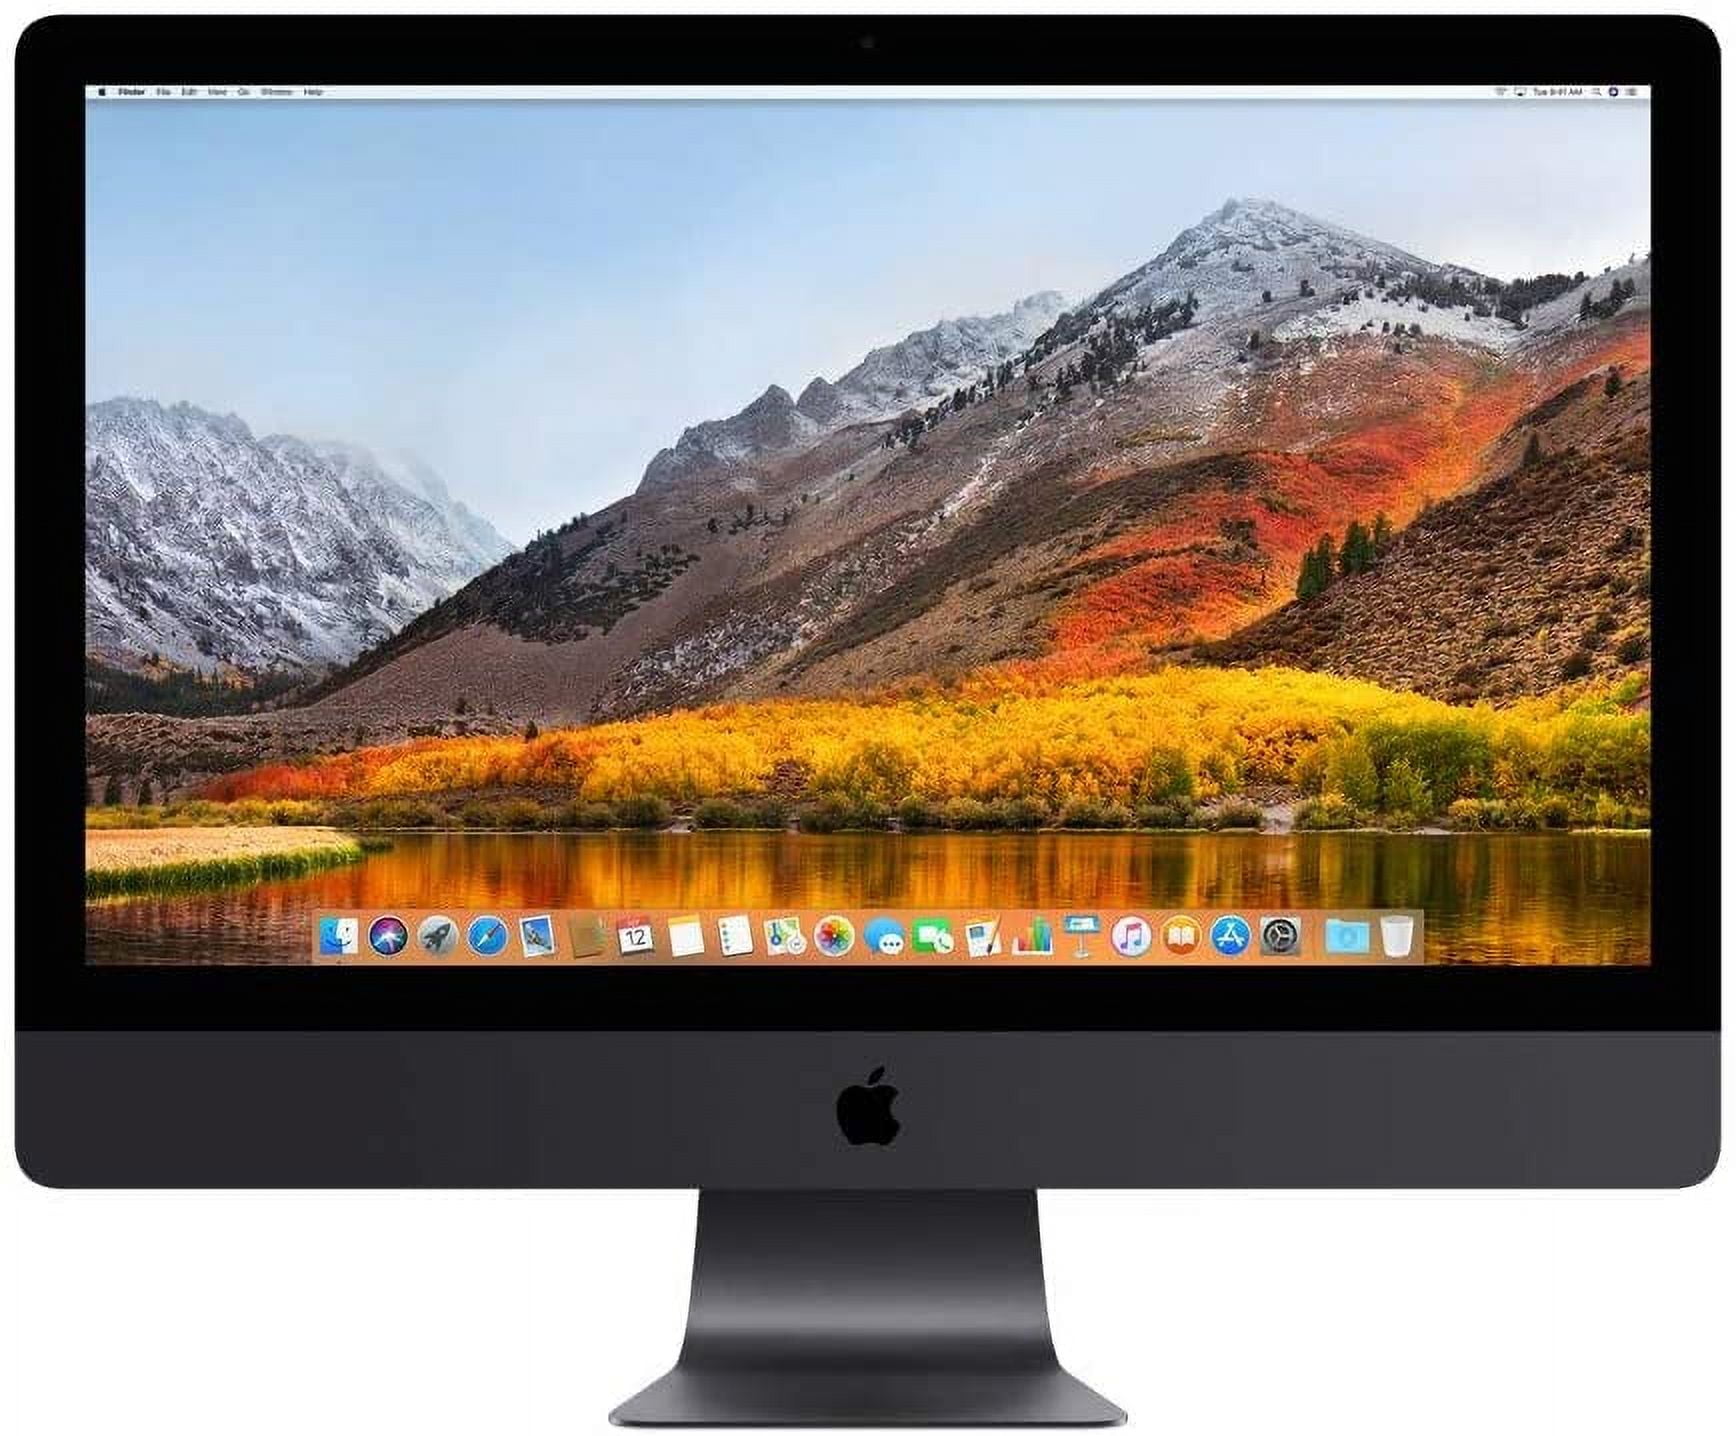 Restored Apple 27-Inch iMac Pro with Retina 5K Display (Late 2017)  MQ2Y2LL/A, 3.2GHz Intel Xeon W, 32GB RAM macOS, 1TB SSD, - Space Gray  (Refurbished)